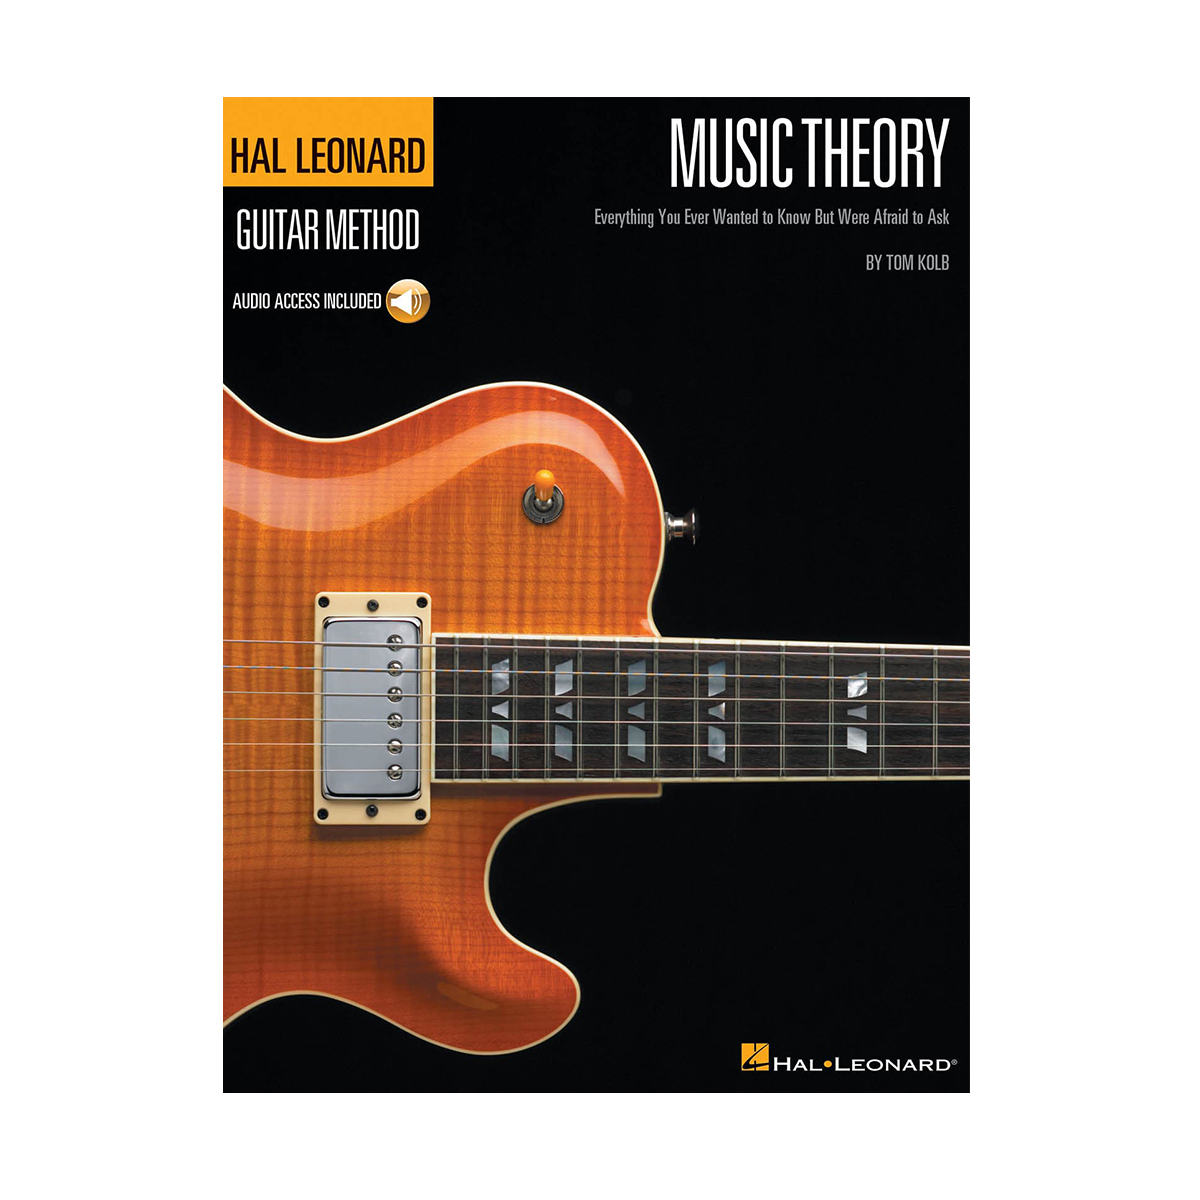 Hal Leonard Guitar Method - Music Theory